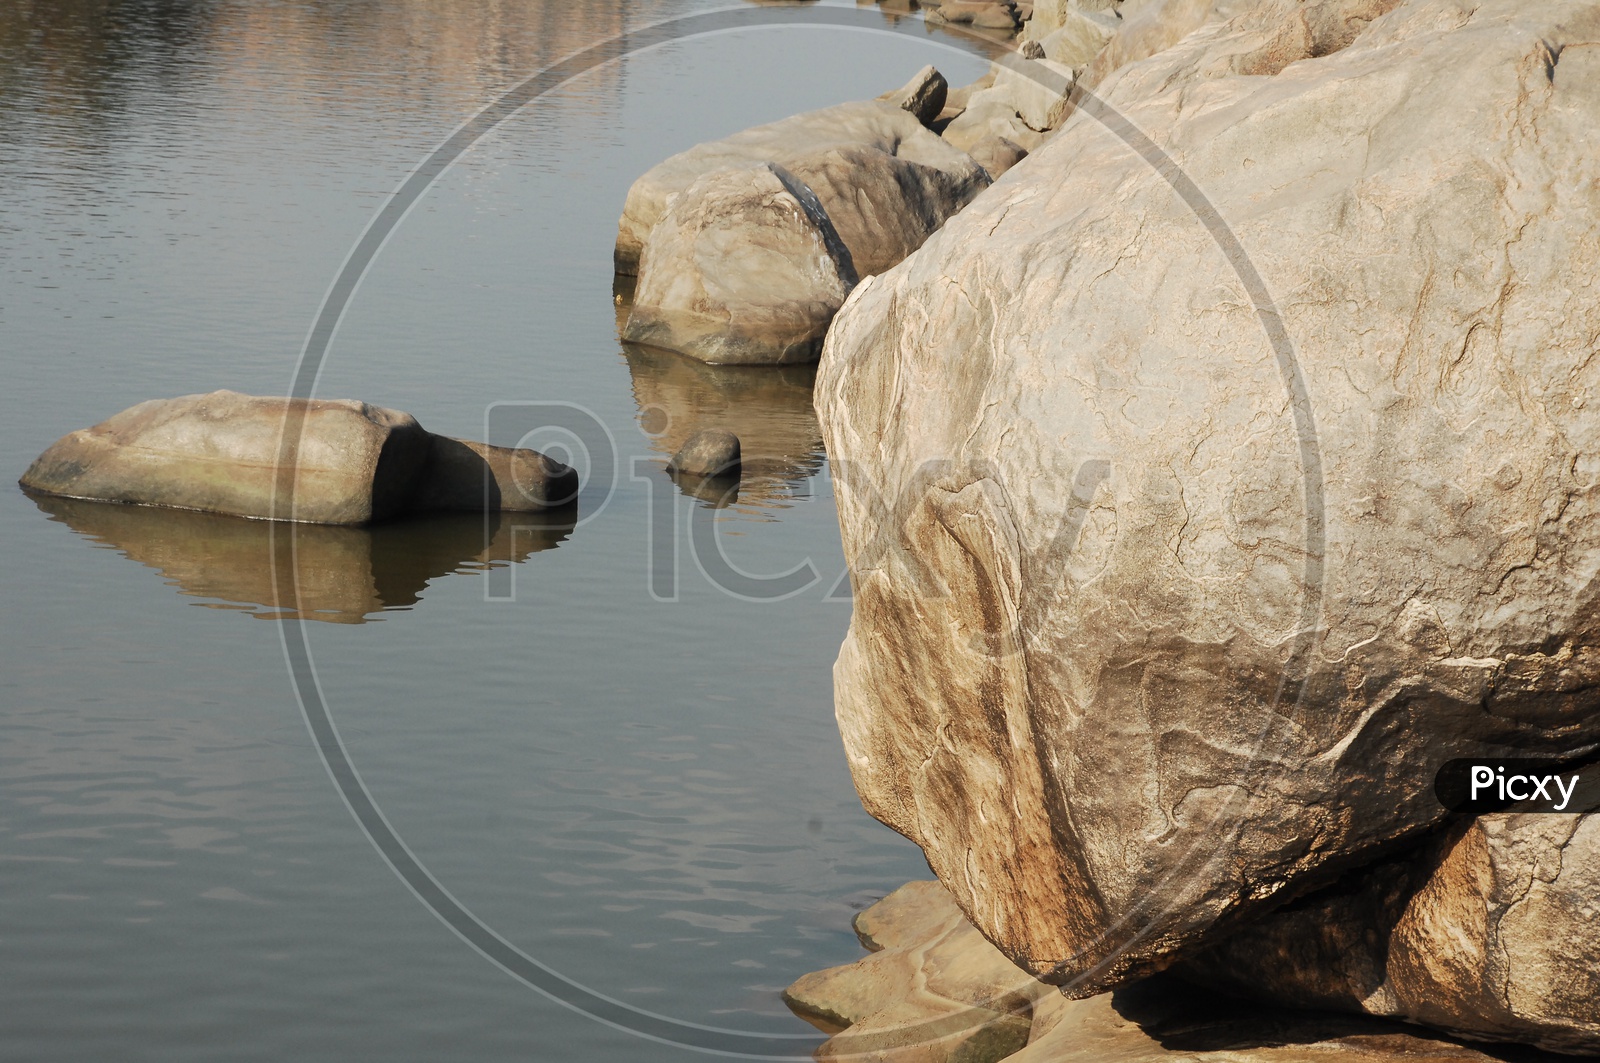 Large rocks inside and beside a lake